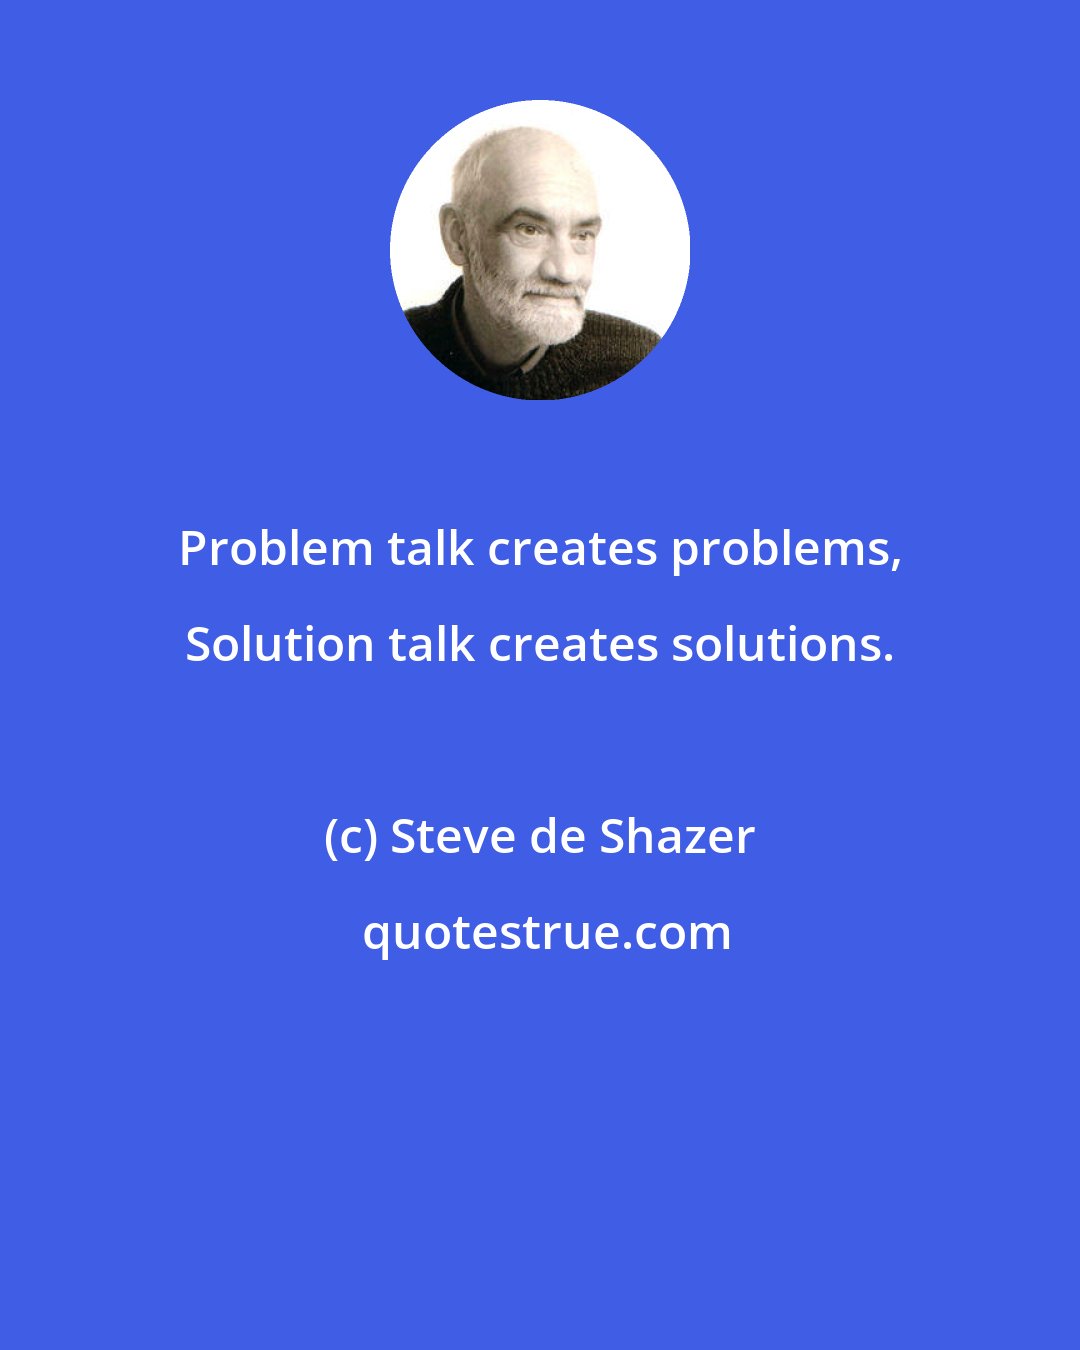 Steve de Shazer: Problem talk creates problems, Solution talk creates solutions.